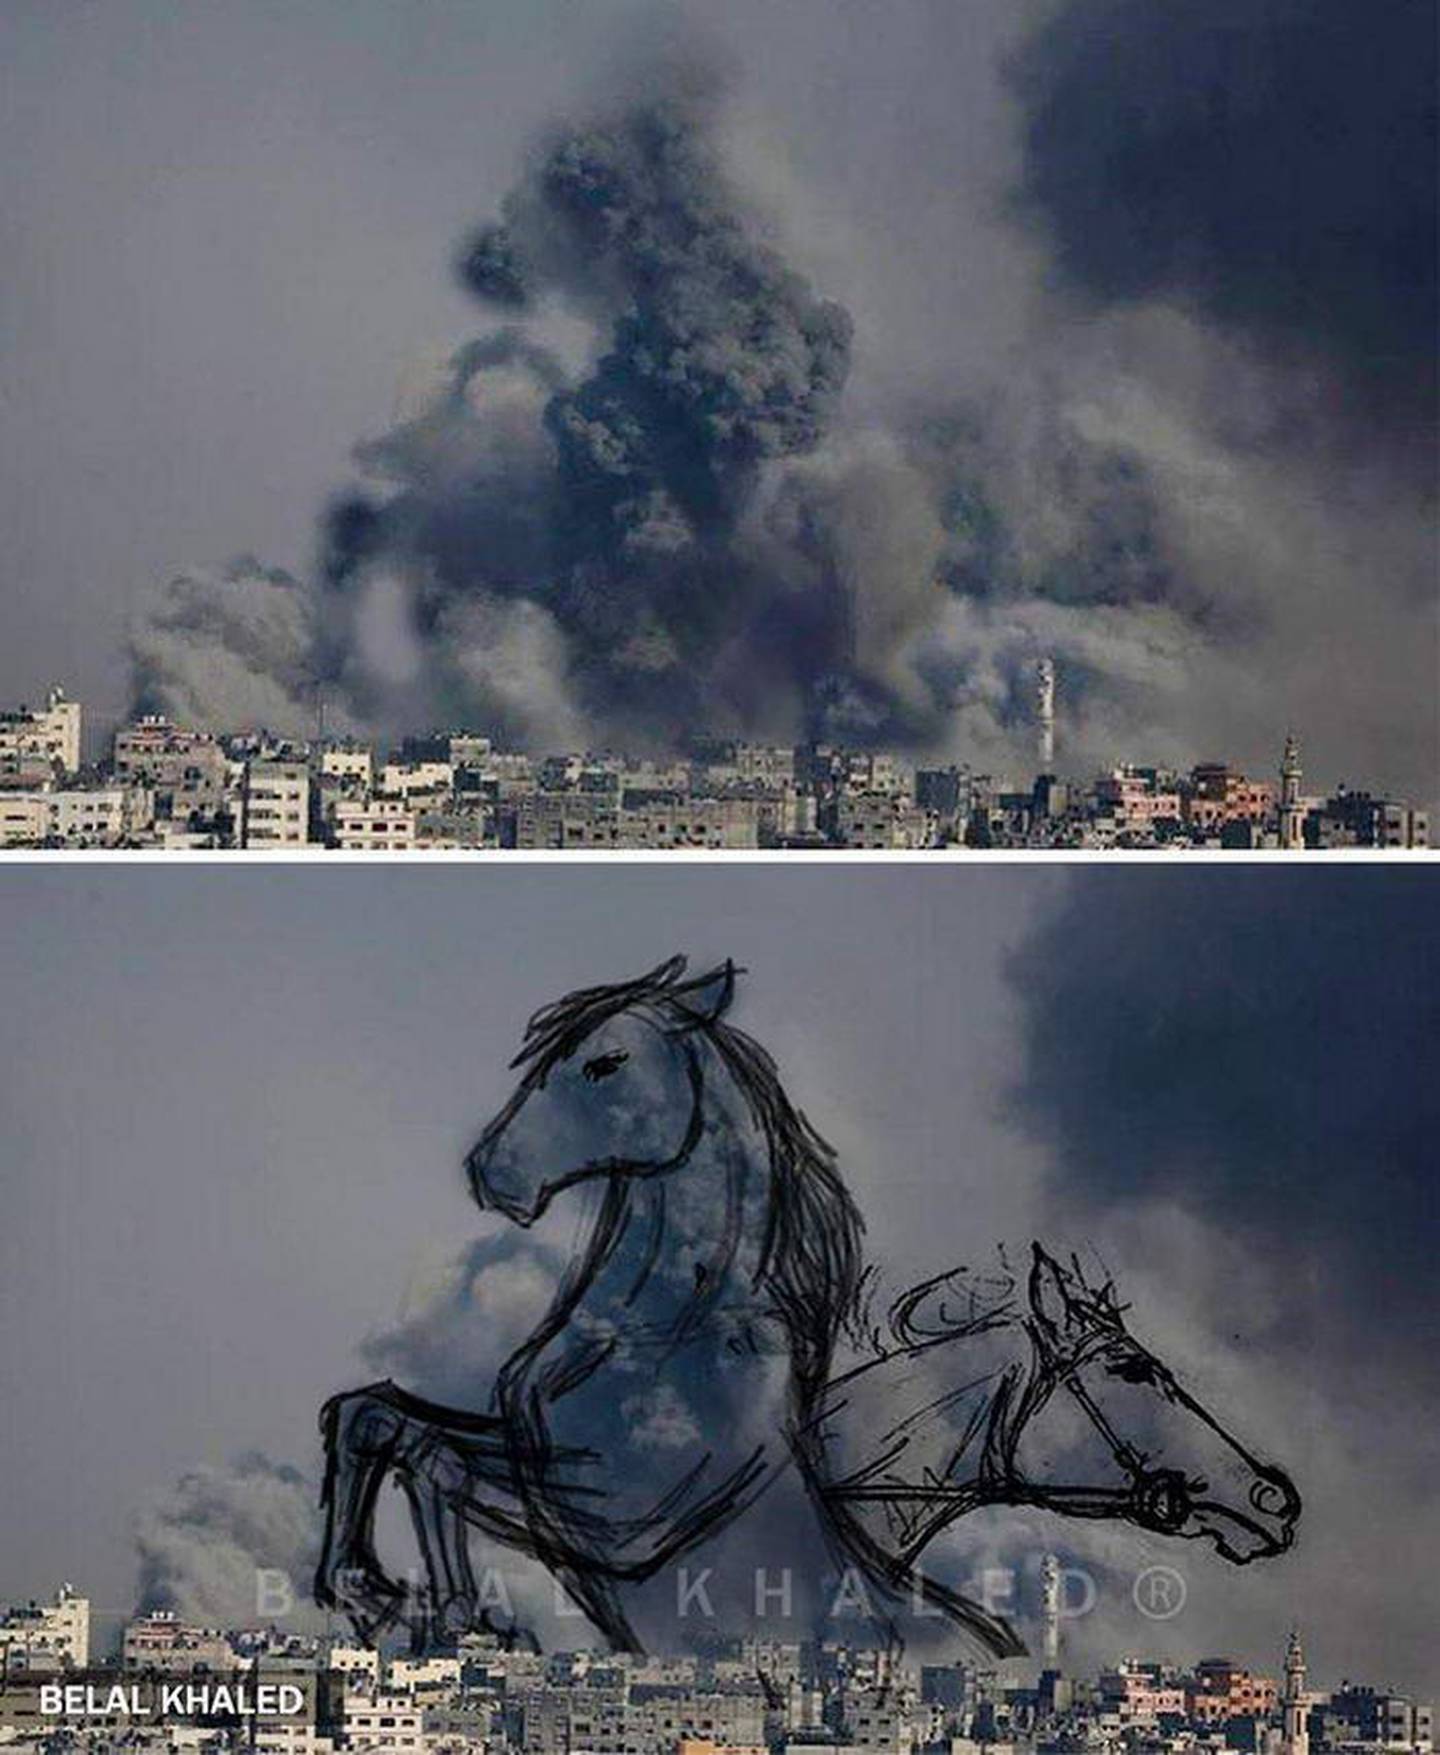 In this 2014 work, Belal Khaled superimposed sketches of horses on a landscape of destruction during the war. Belal Khaled